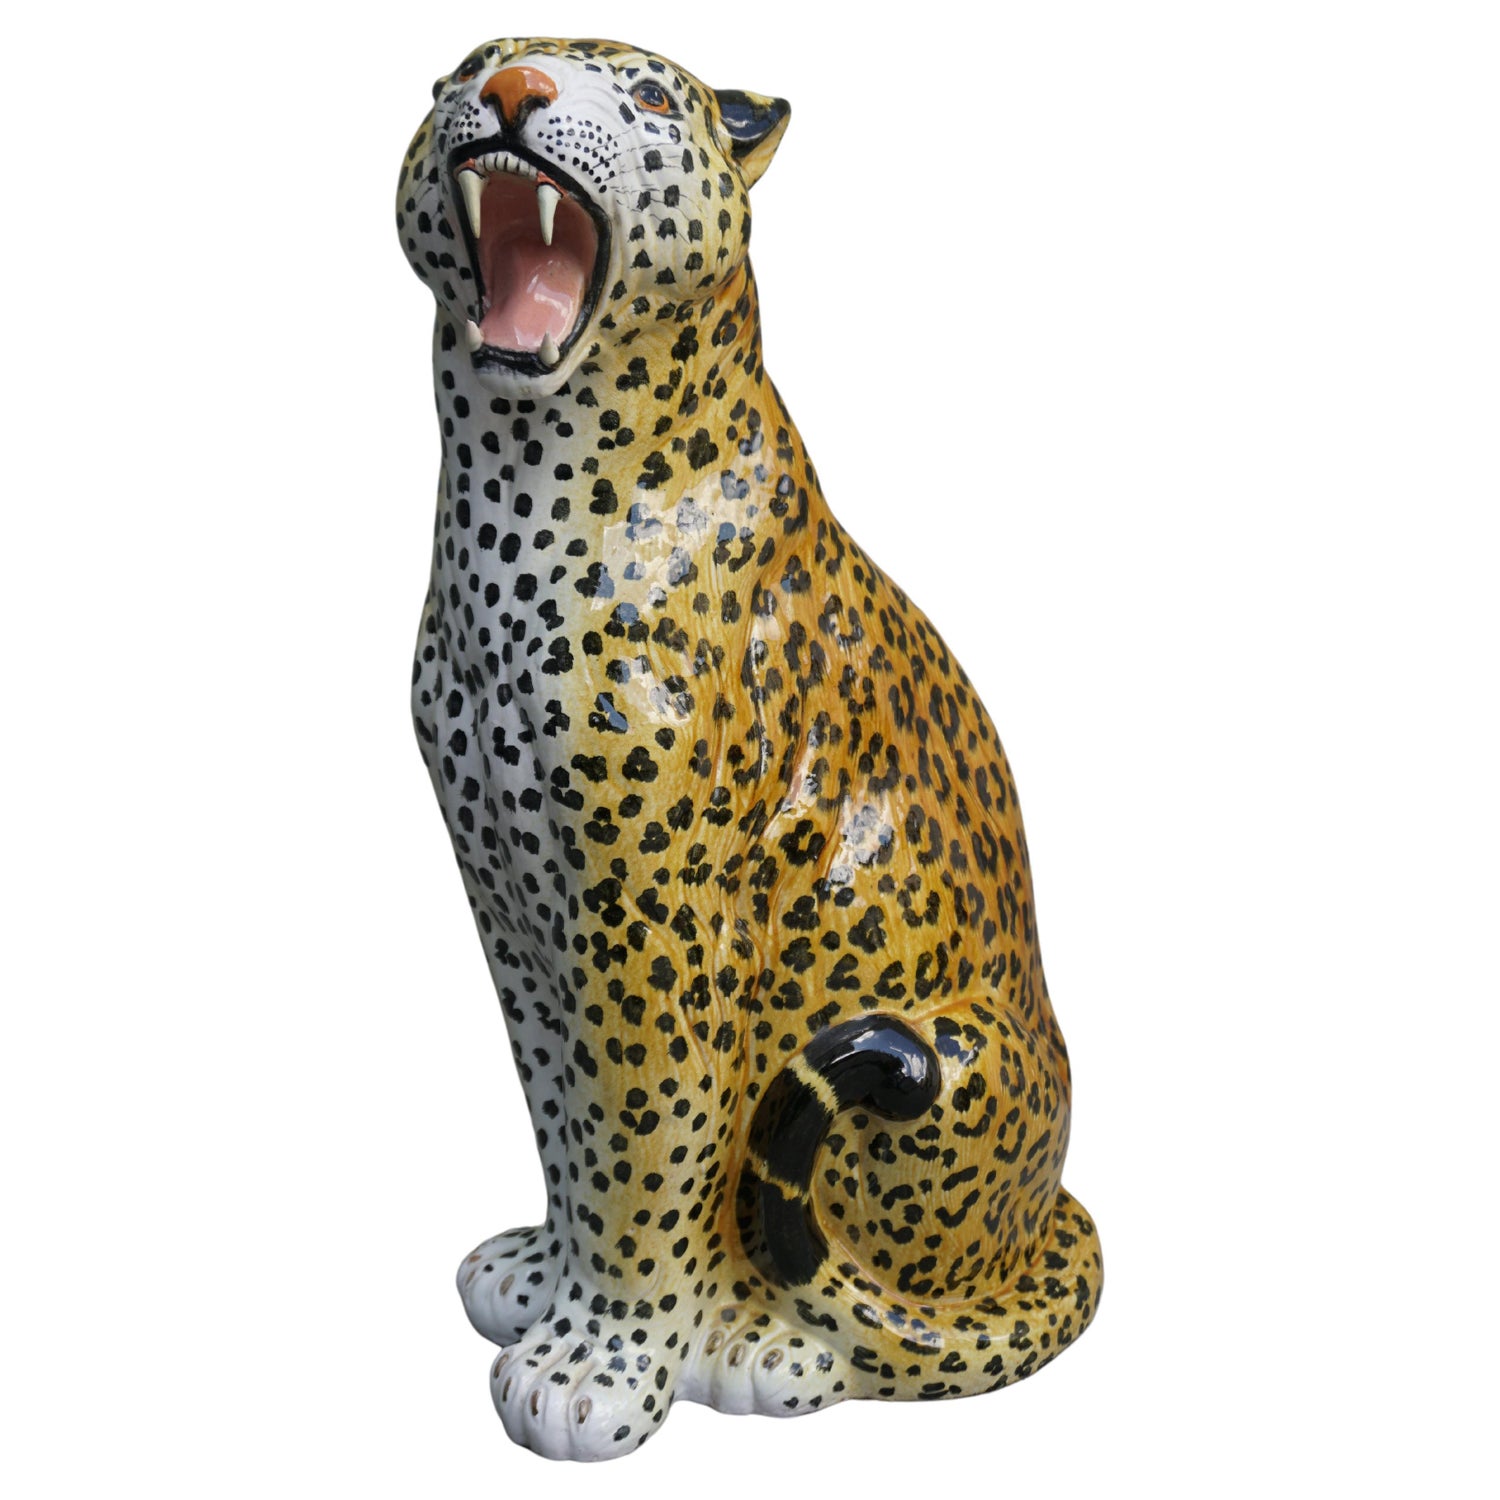 https://a.1stdibscdn.com/large-italian-glazed-terracotta-leopard-cheetah-statue-1960s-hollywood-regency-for-sale/f_9504/f_355994121691443147085/f_35599412_1691443148646_bg_processed.jpg?width=1500